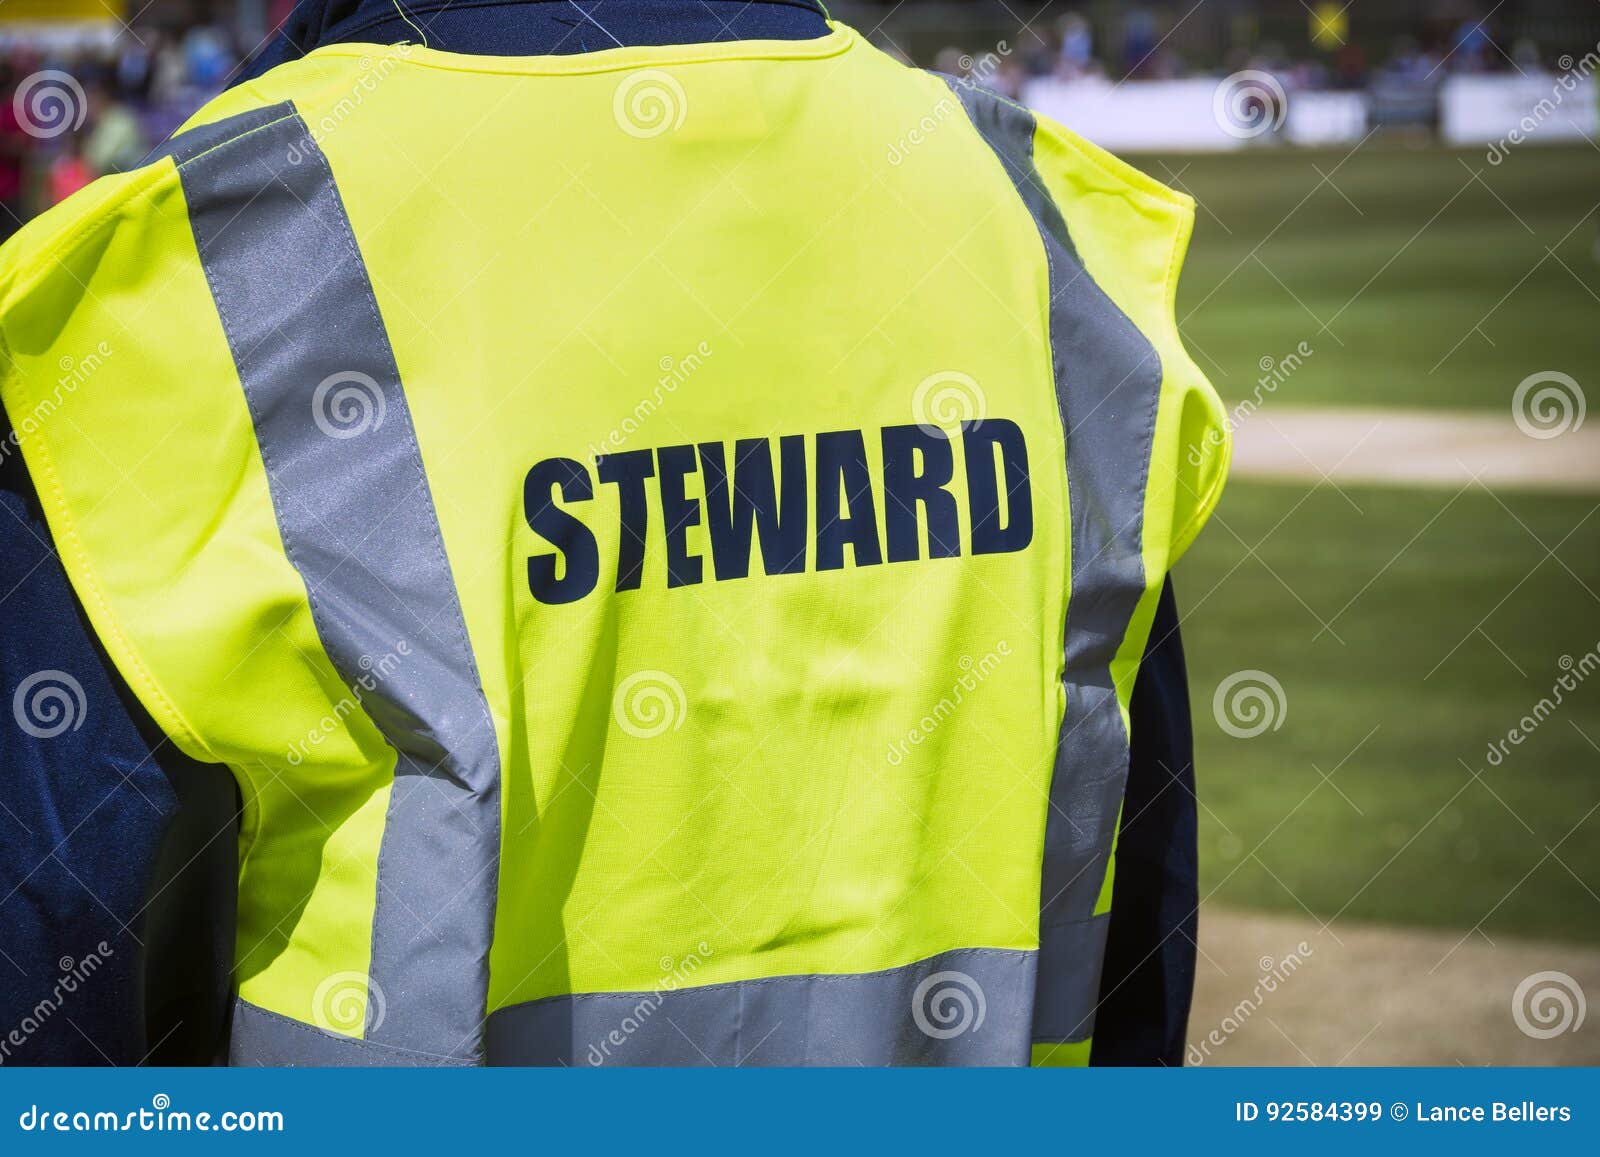 sports steward by pitch in high viz jacket